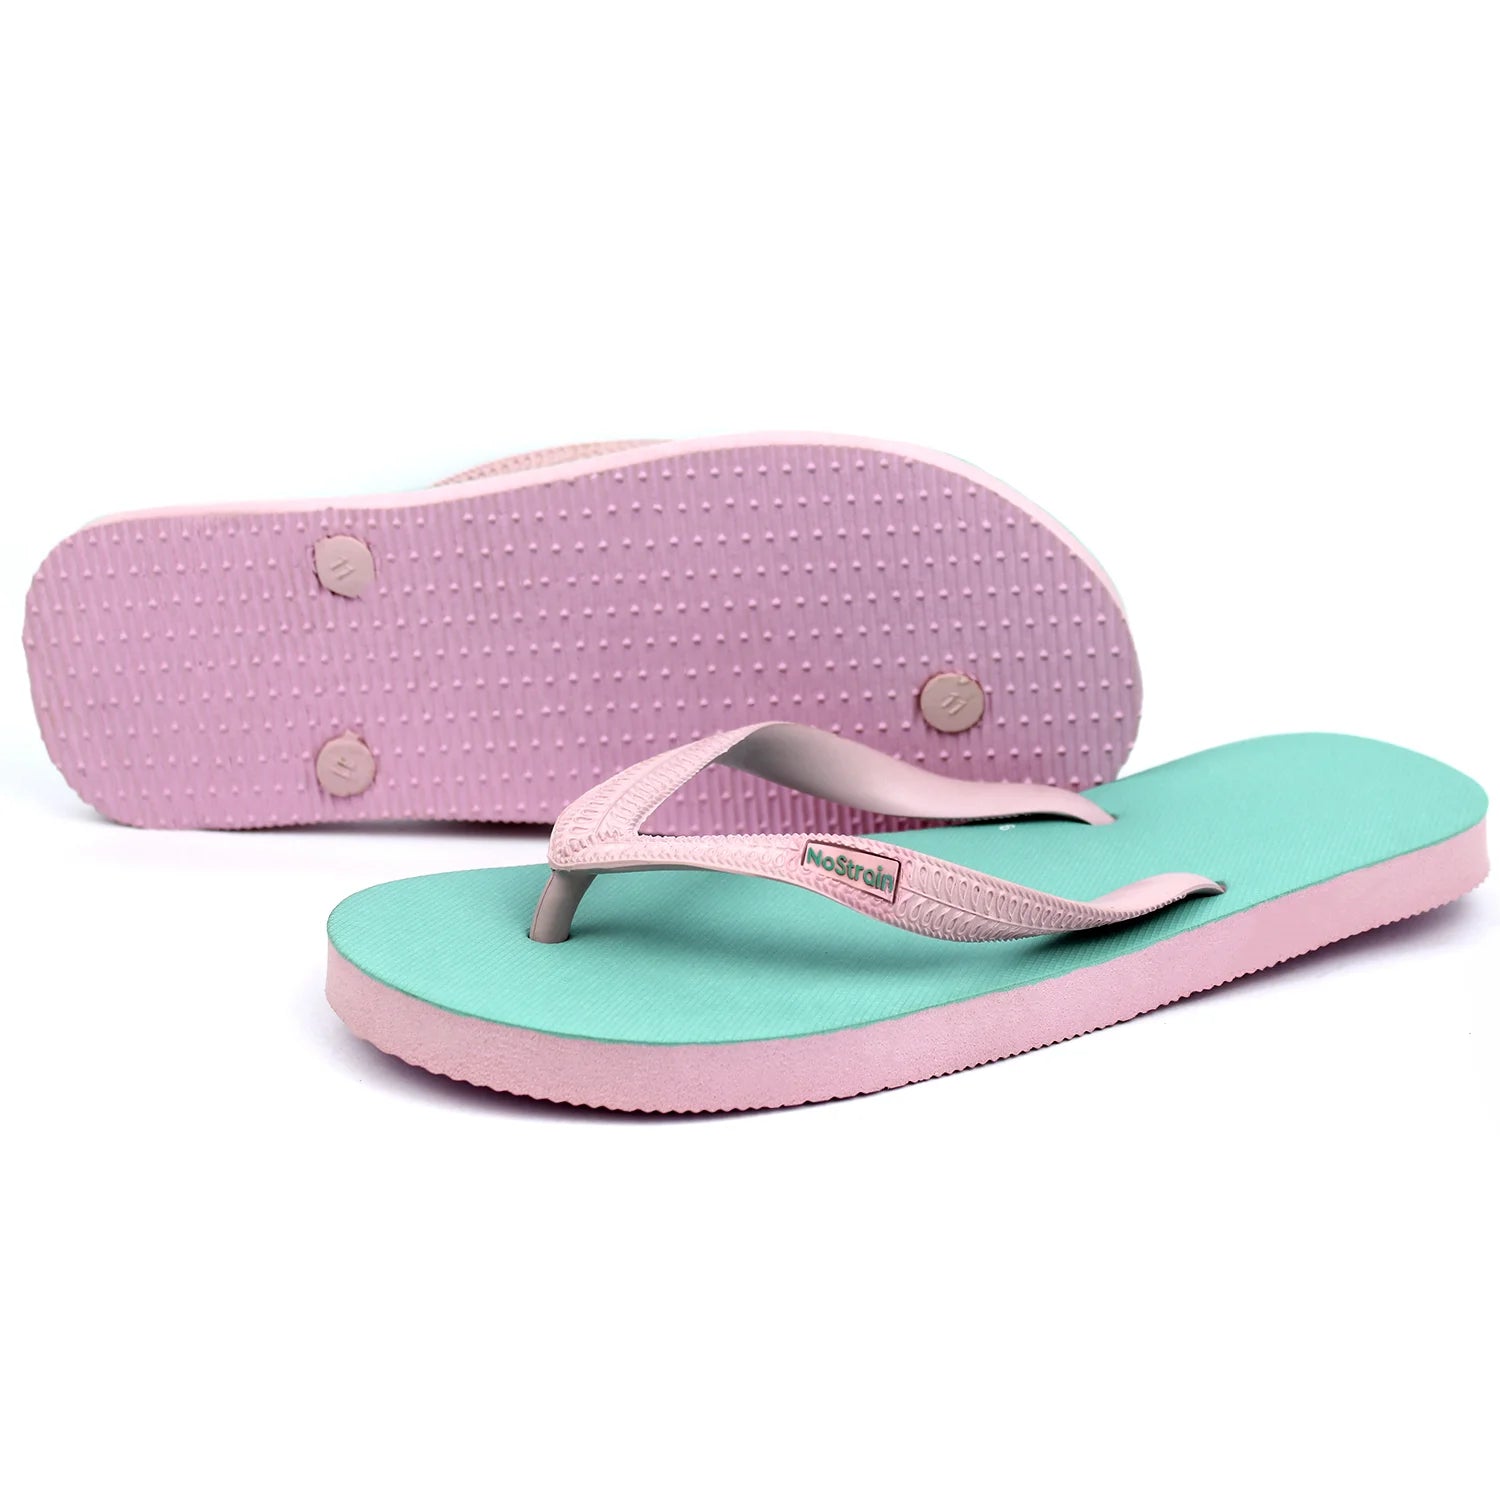 Sea Green & Pink Natural Rubber Flip-Flop Slippers (Men)